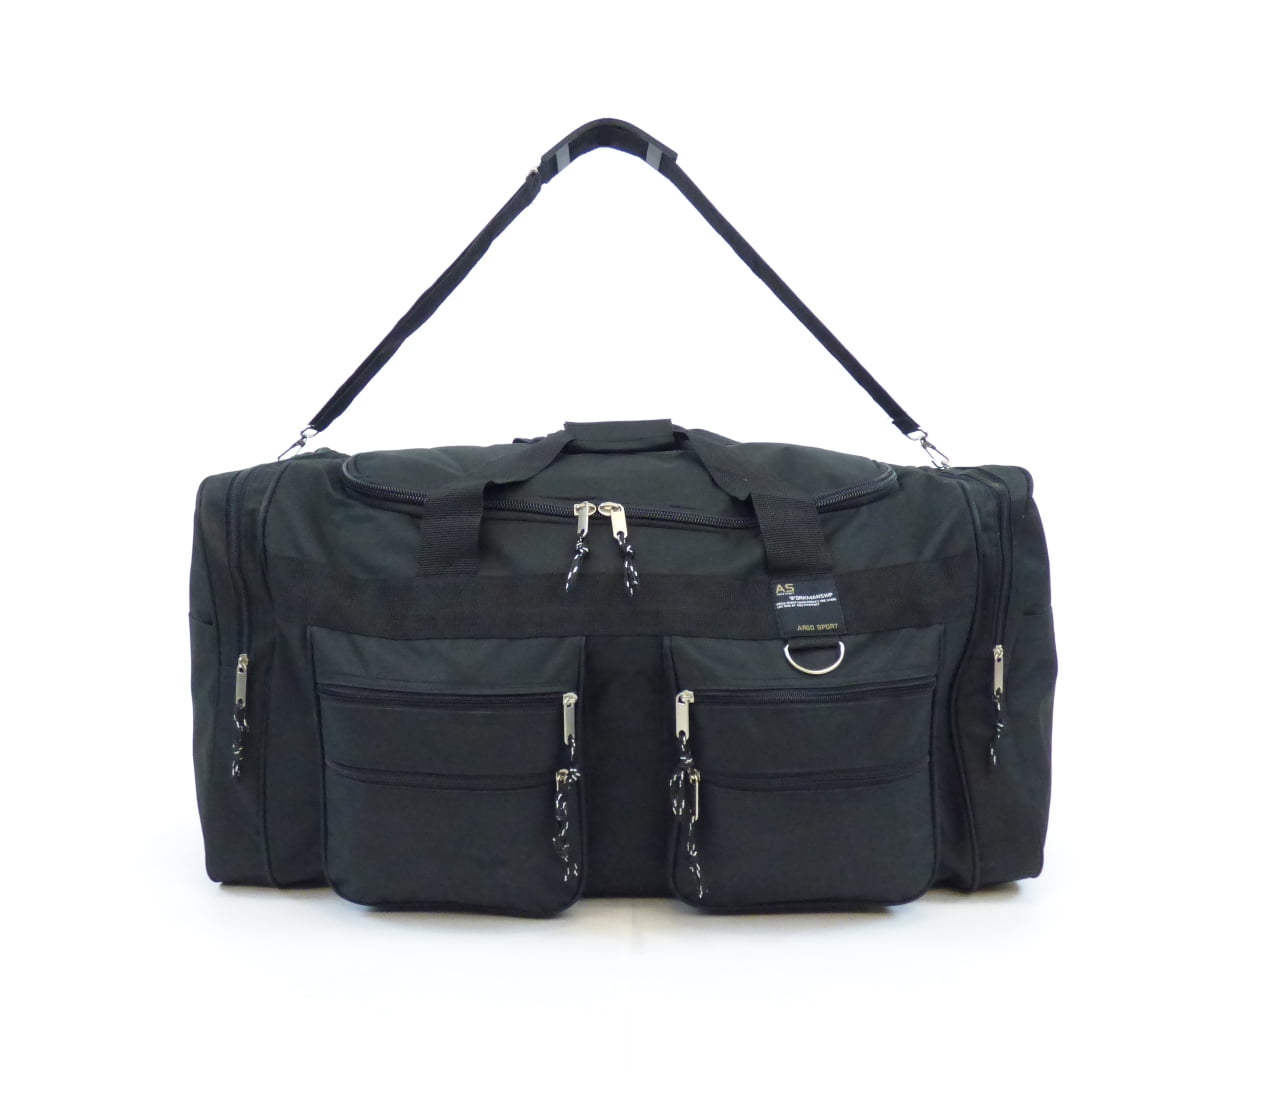 Dual-Tone 28 in. Black Duffel Bag with Shoulder Strap - Walmart.com